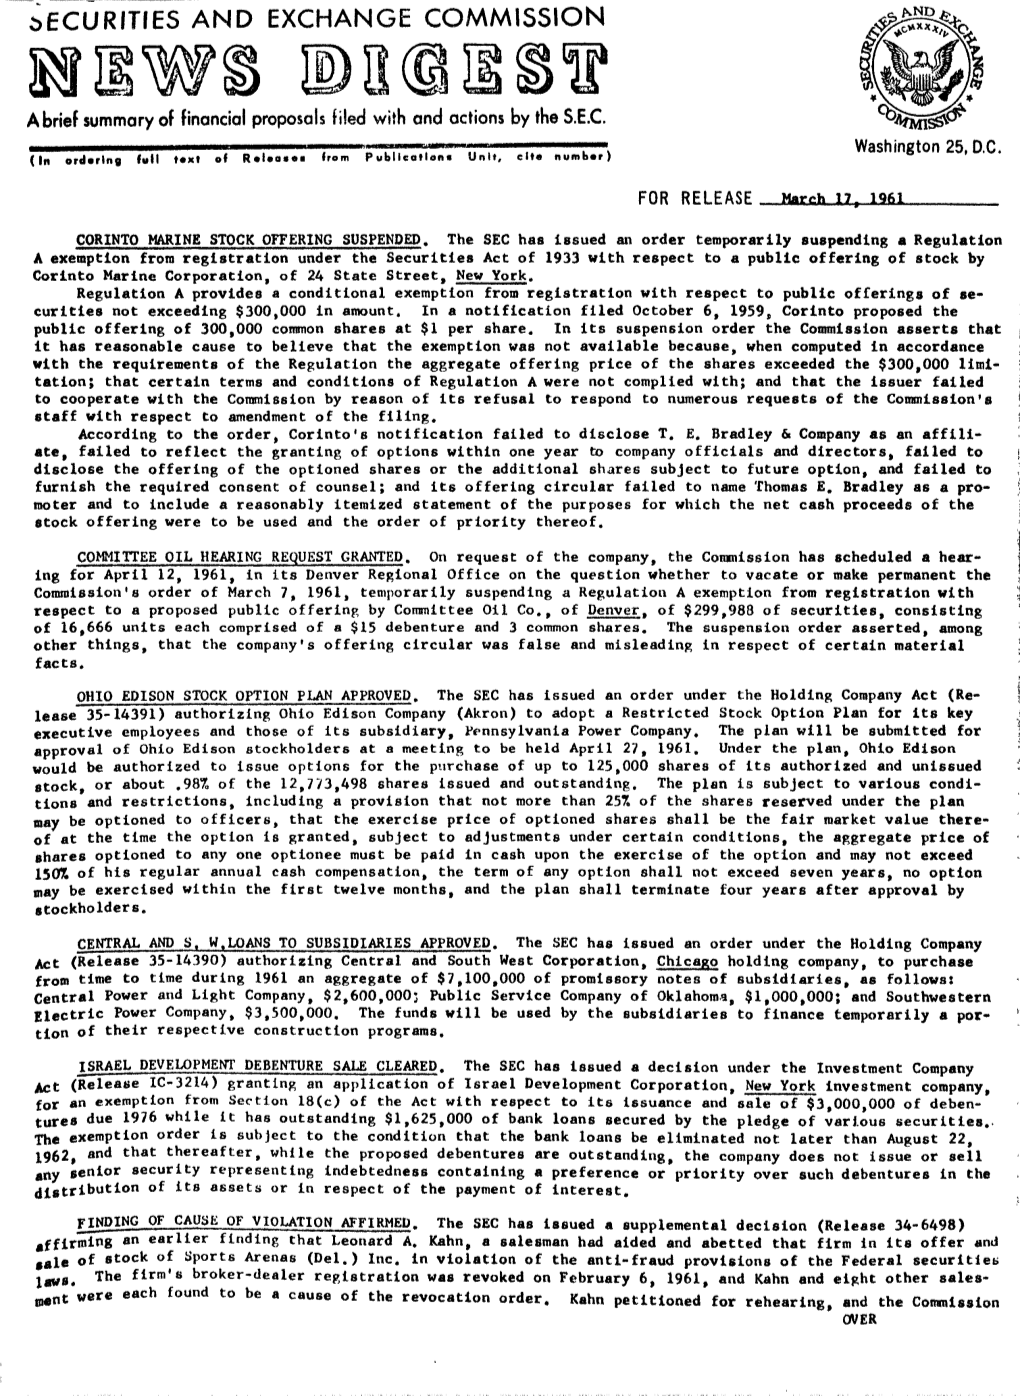 SEC News Digest, 03-17-1961